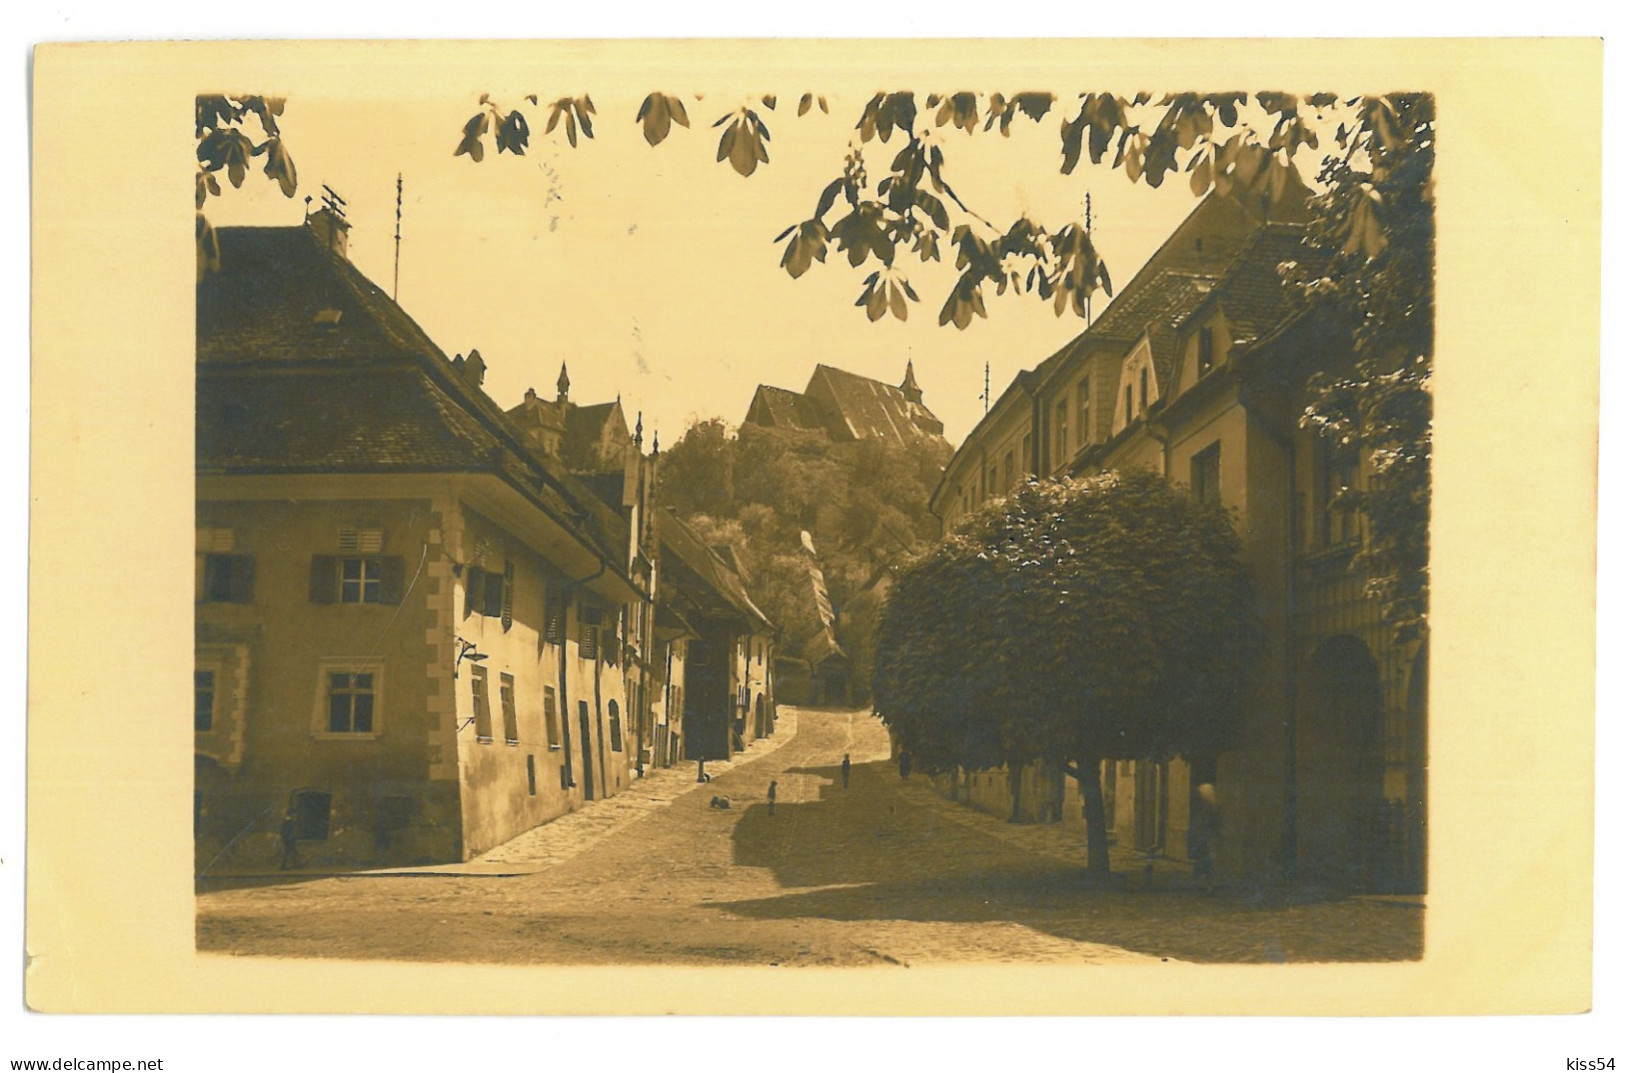 RO 89 - 17439 SIGHISOARA, Mures, Romania - Old Postcard, Real PHOTO - Used - 1931 - Romania